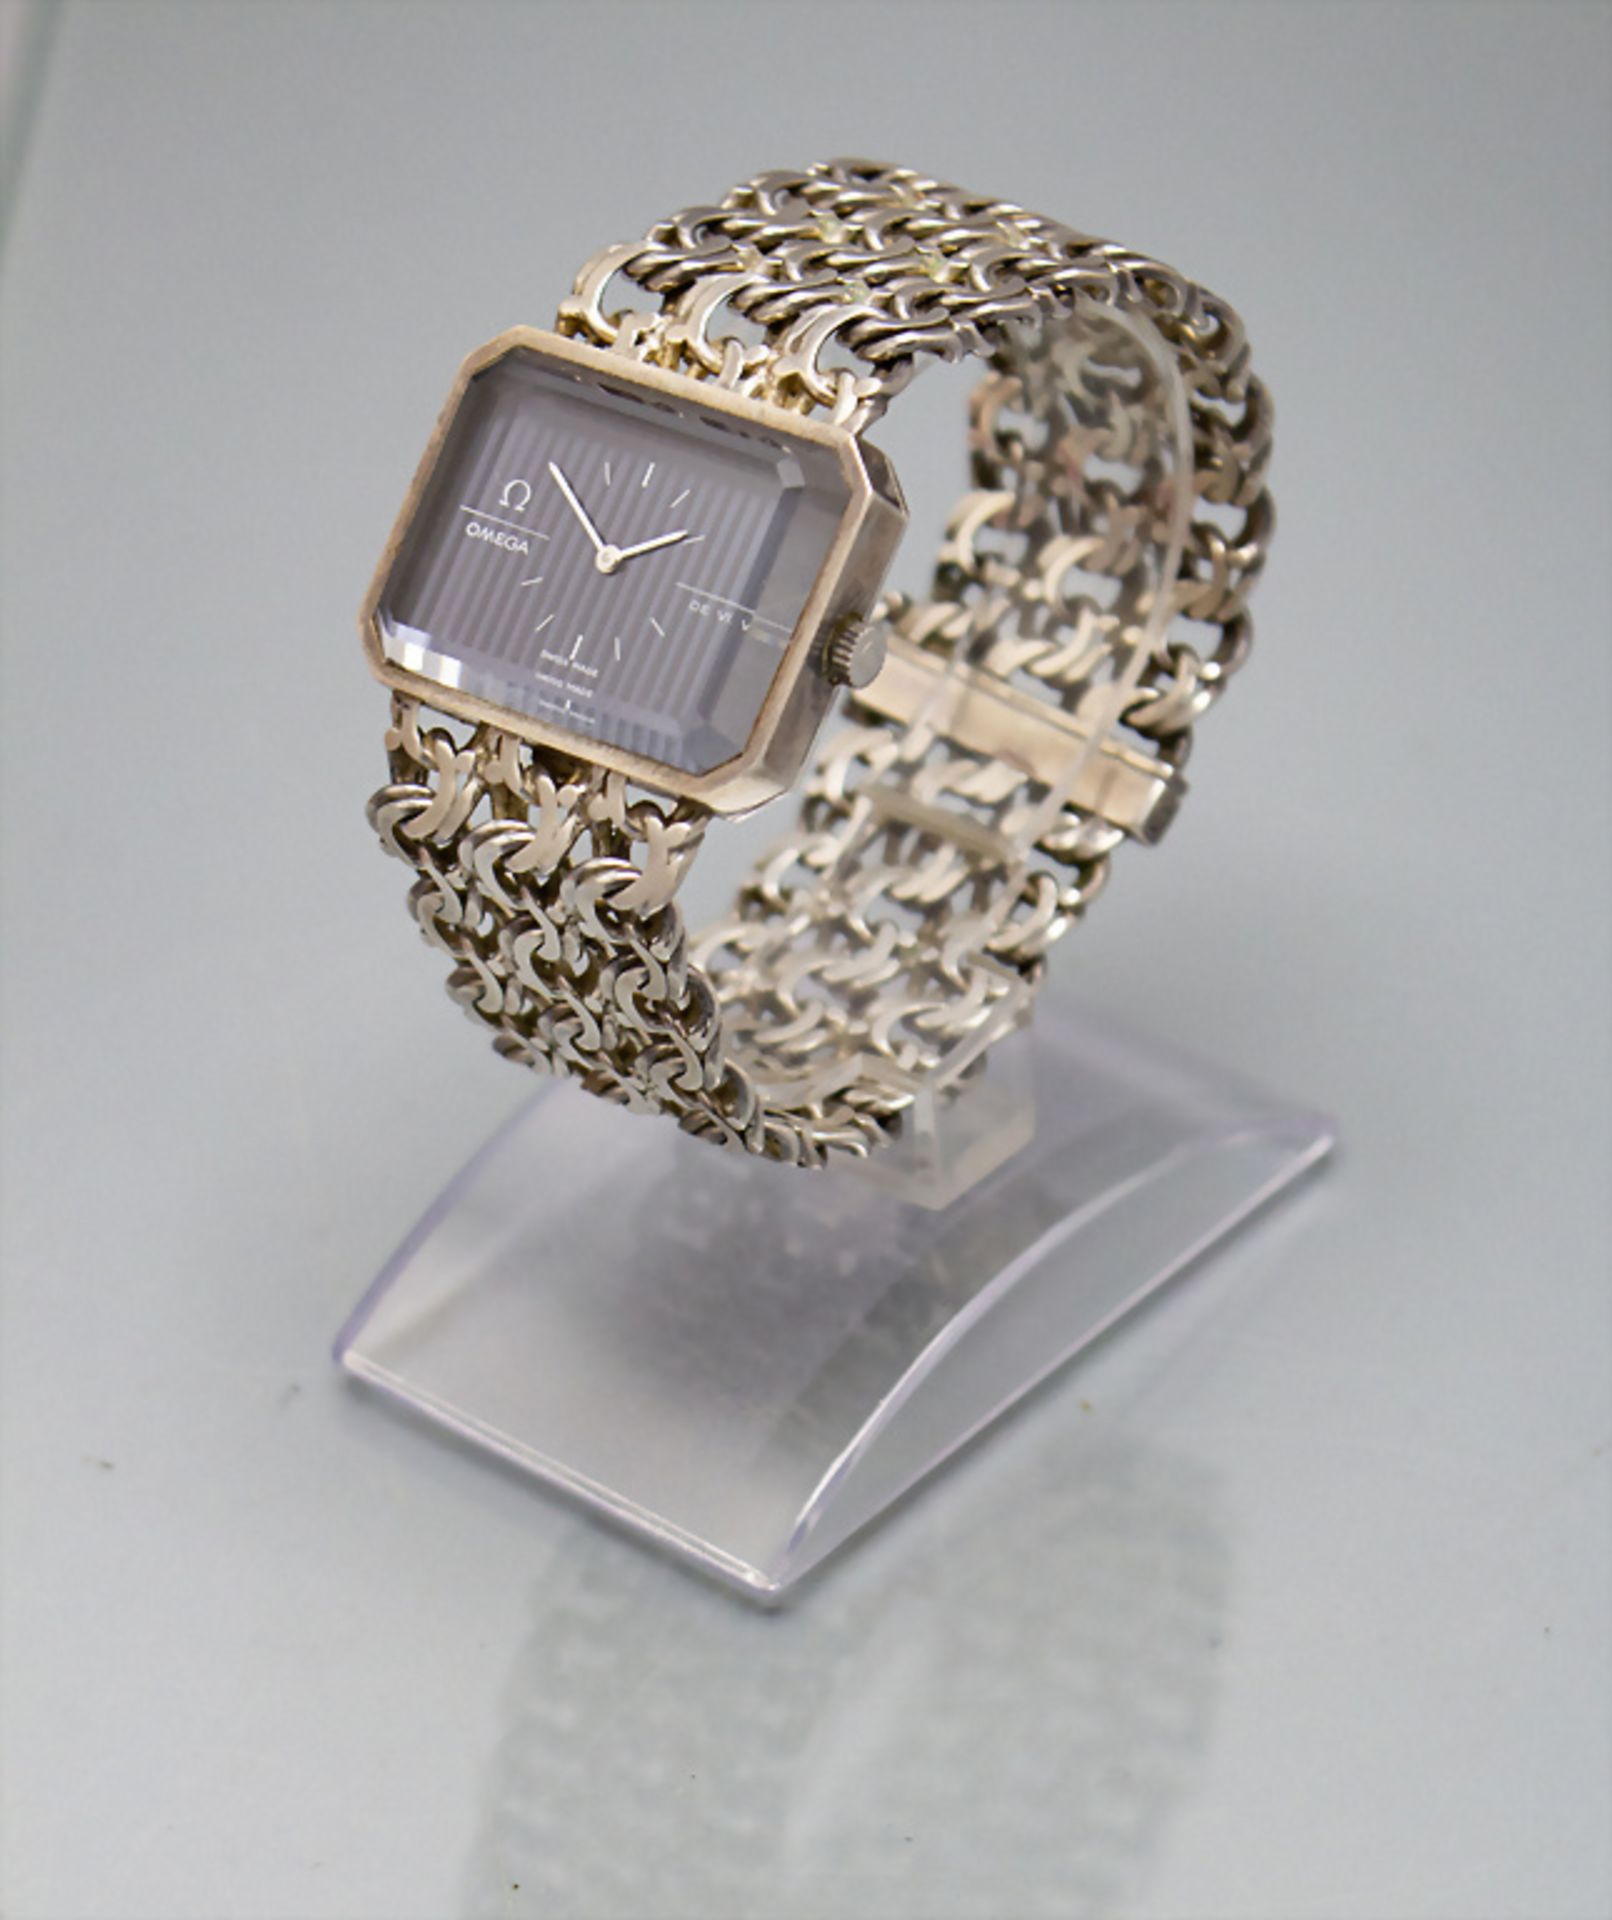 Herrenarmbanduhr / A men's Sterling silver wristwatch, Omega de Ville, Swiss / Schweiz, 1972 - Image 2 of 12